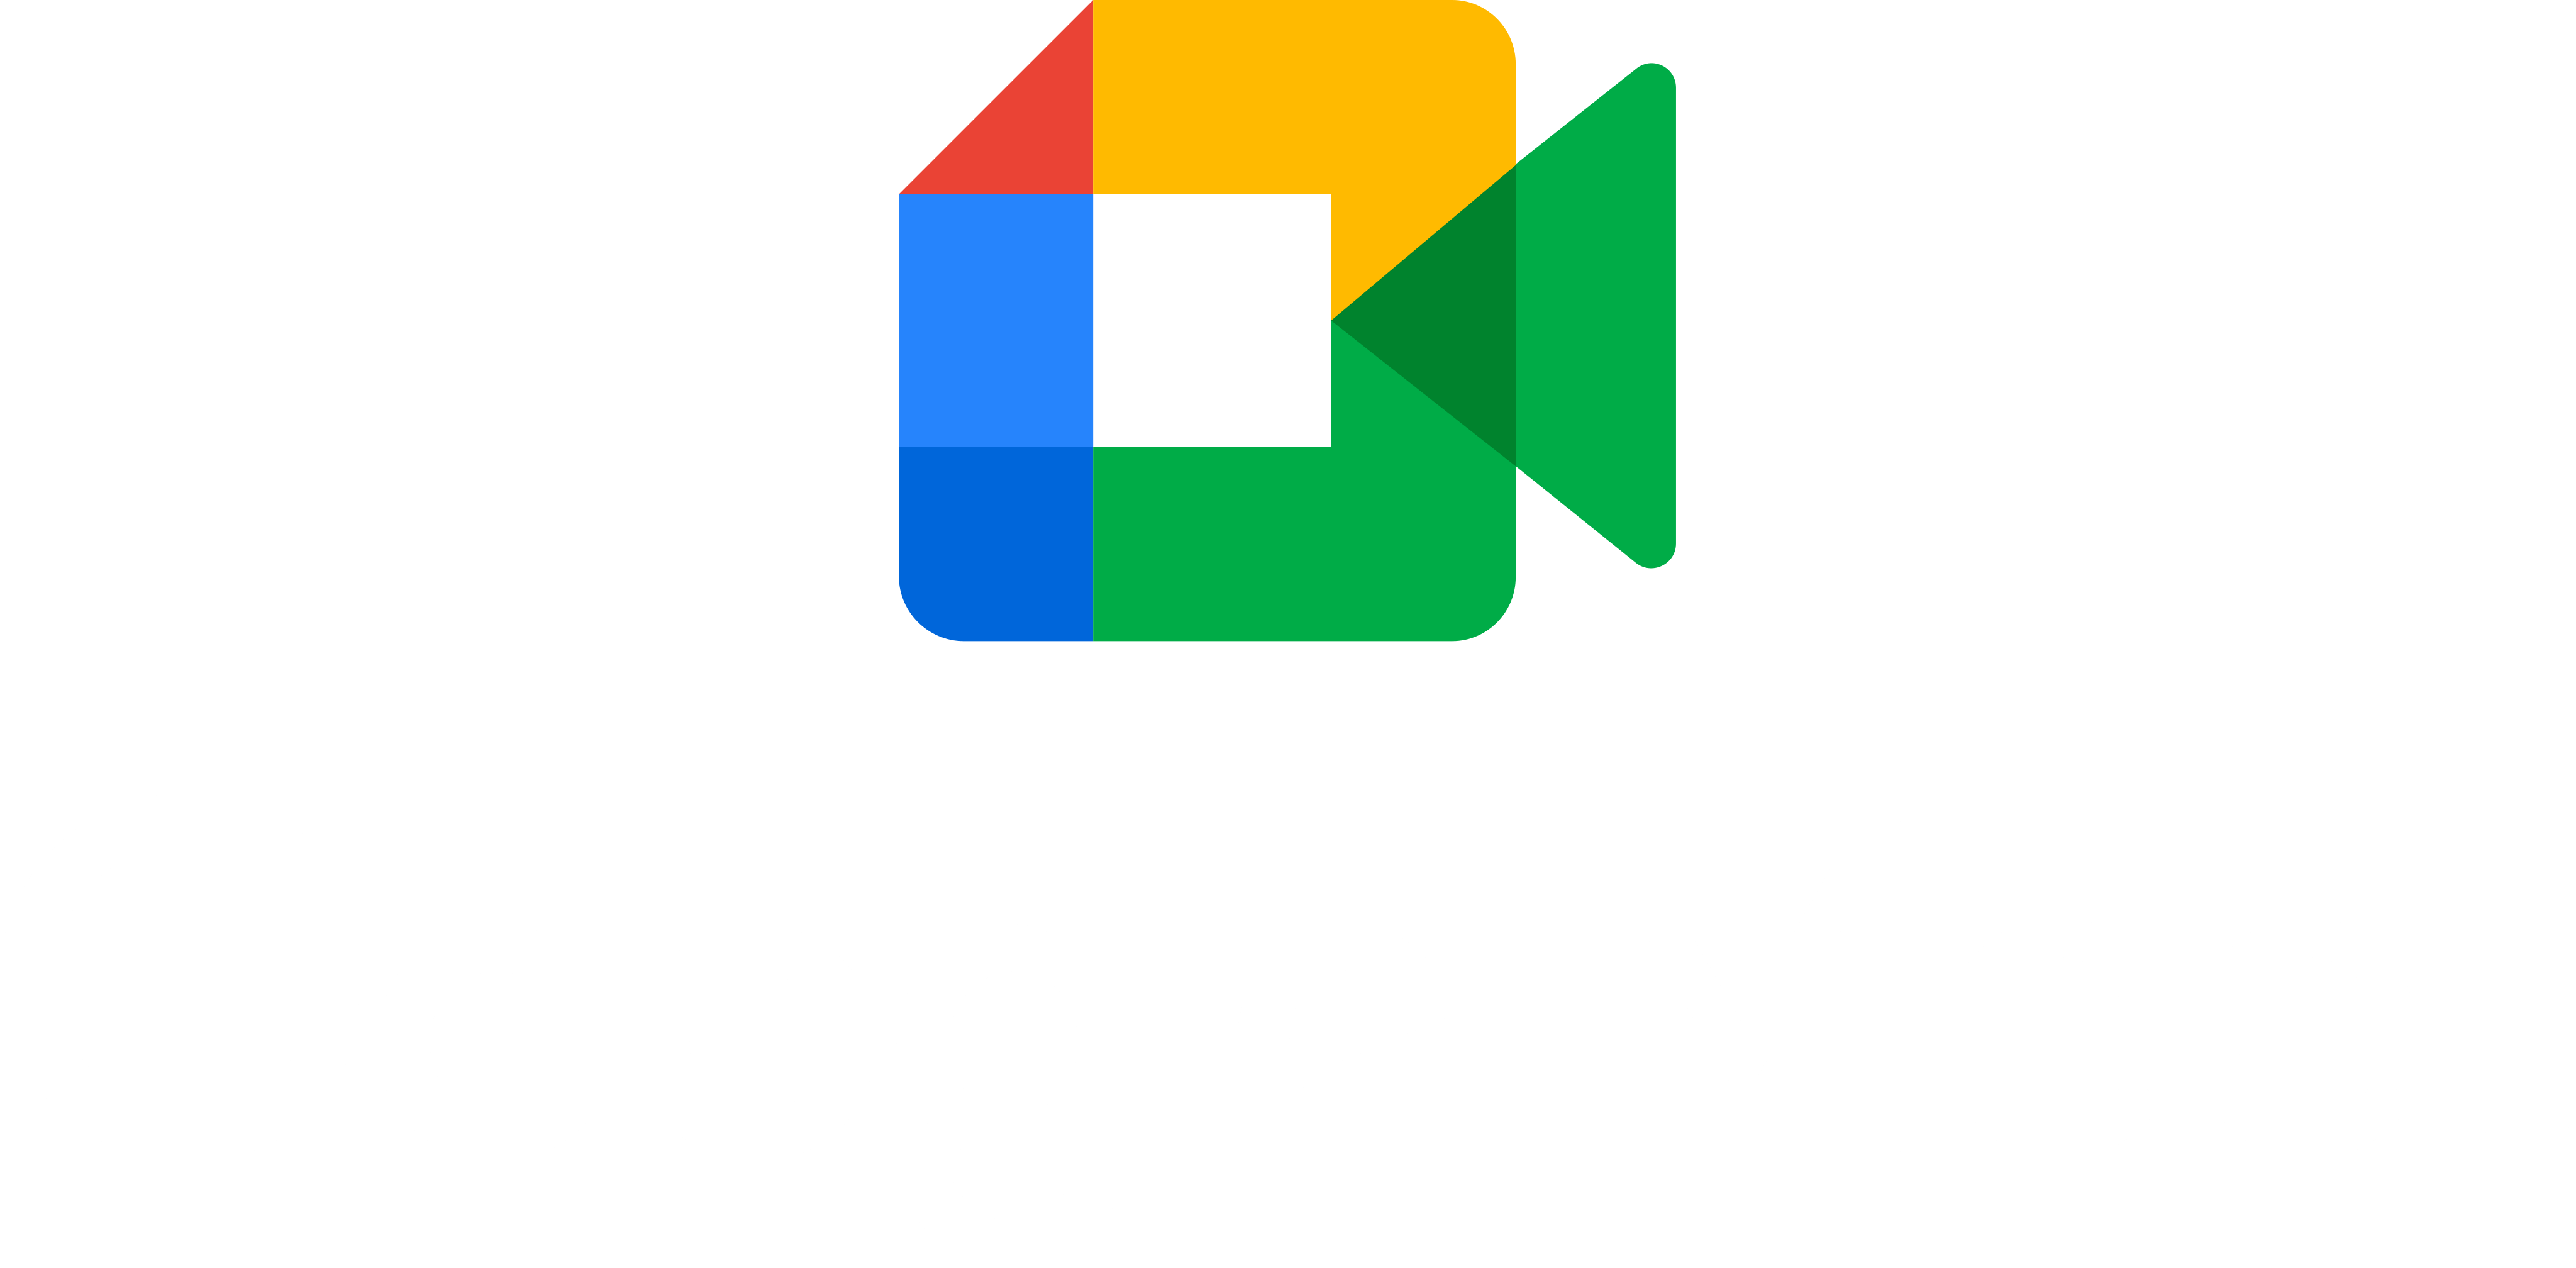 google meet logo 1 copy 6